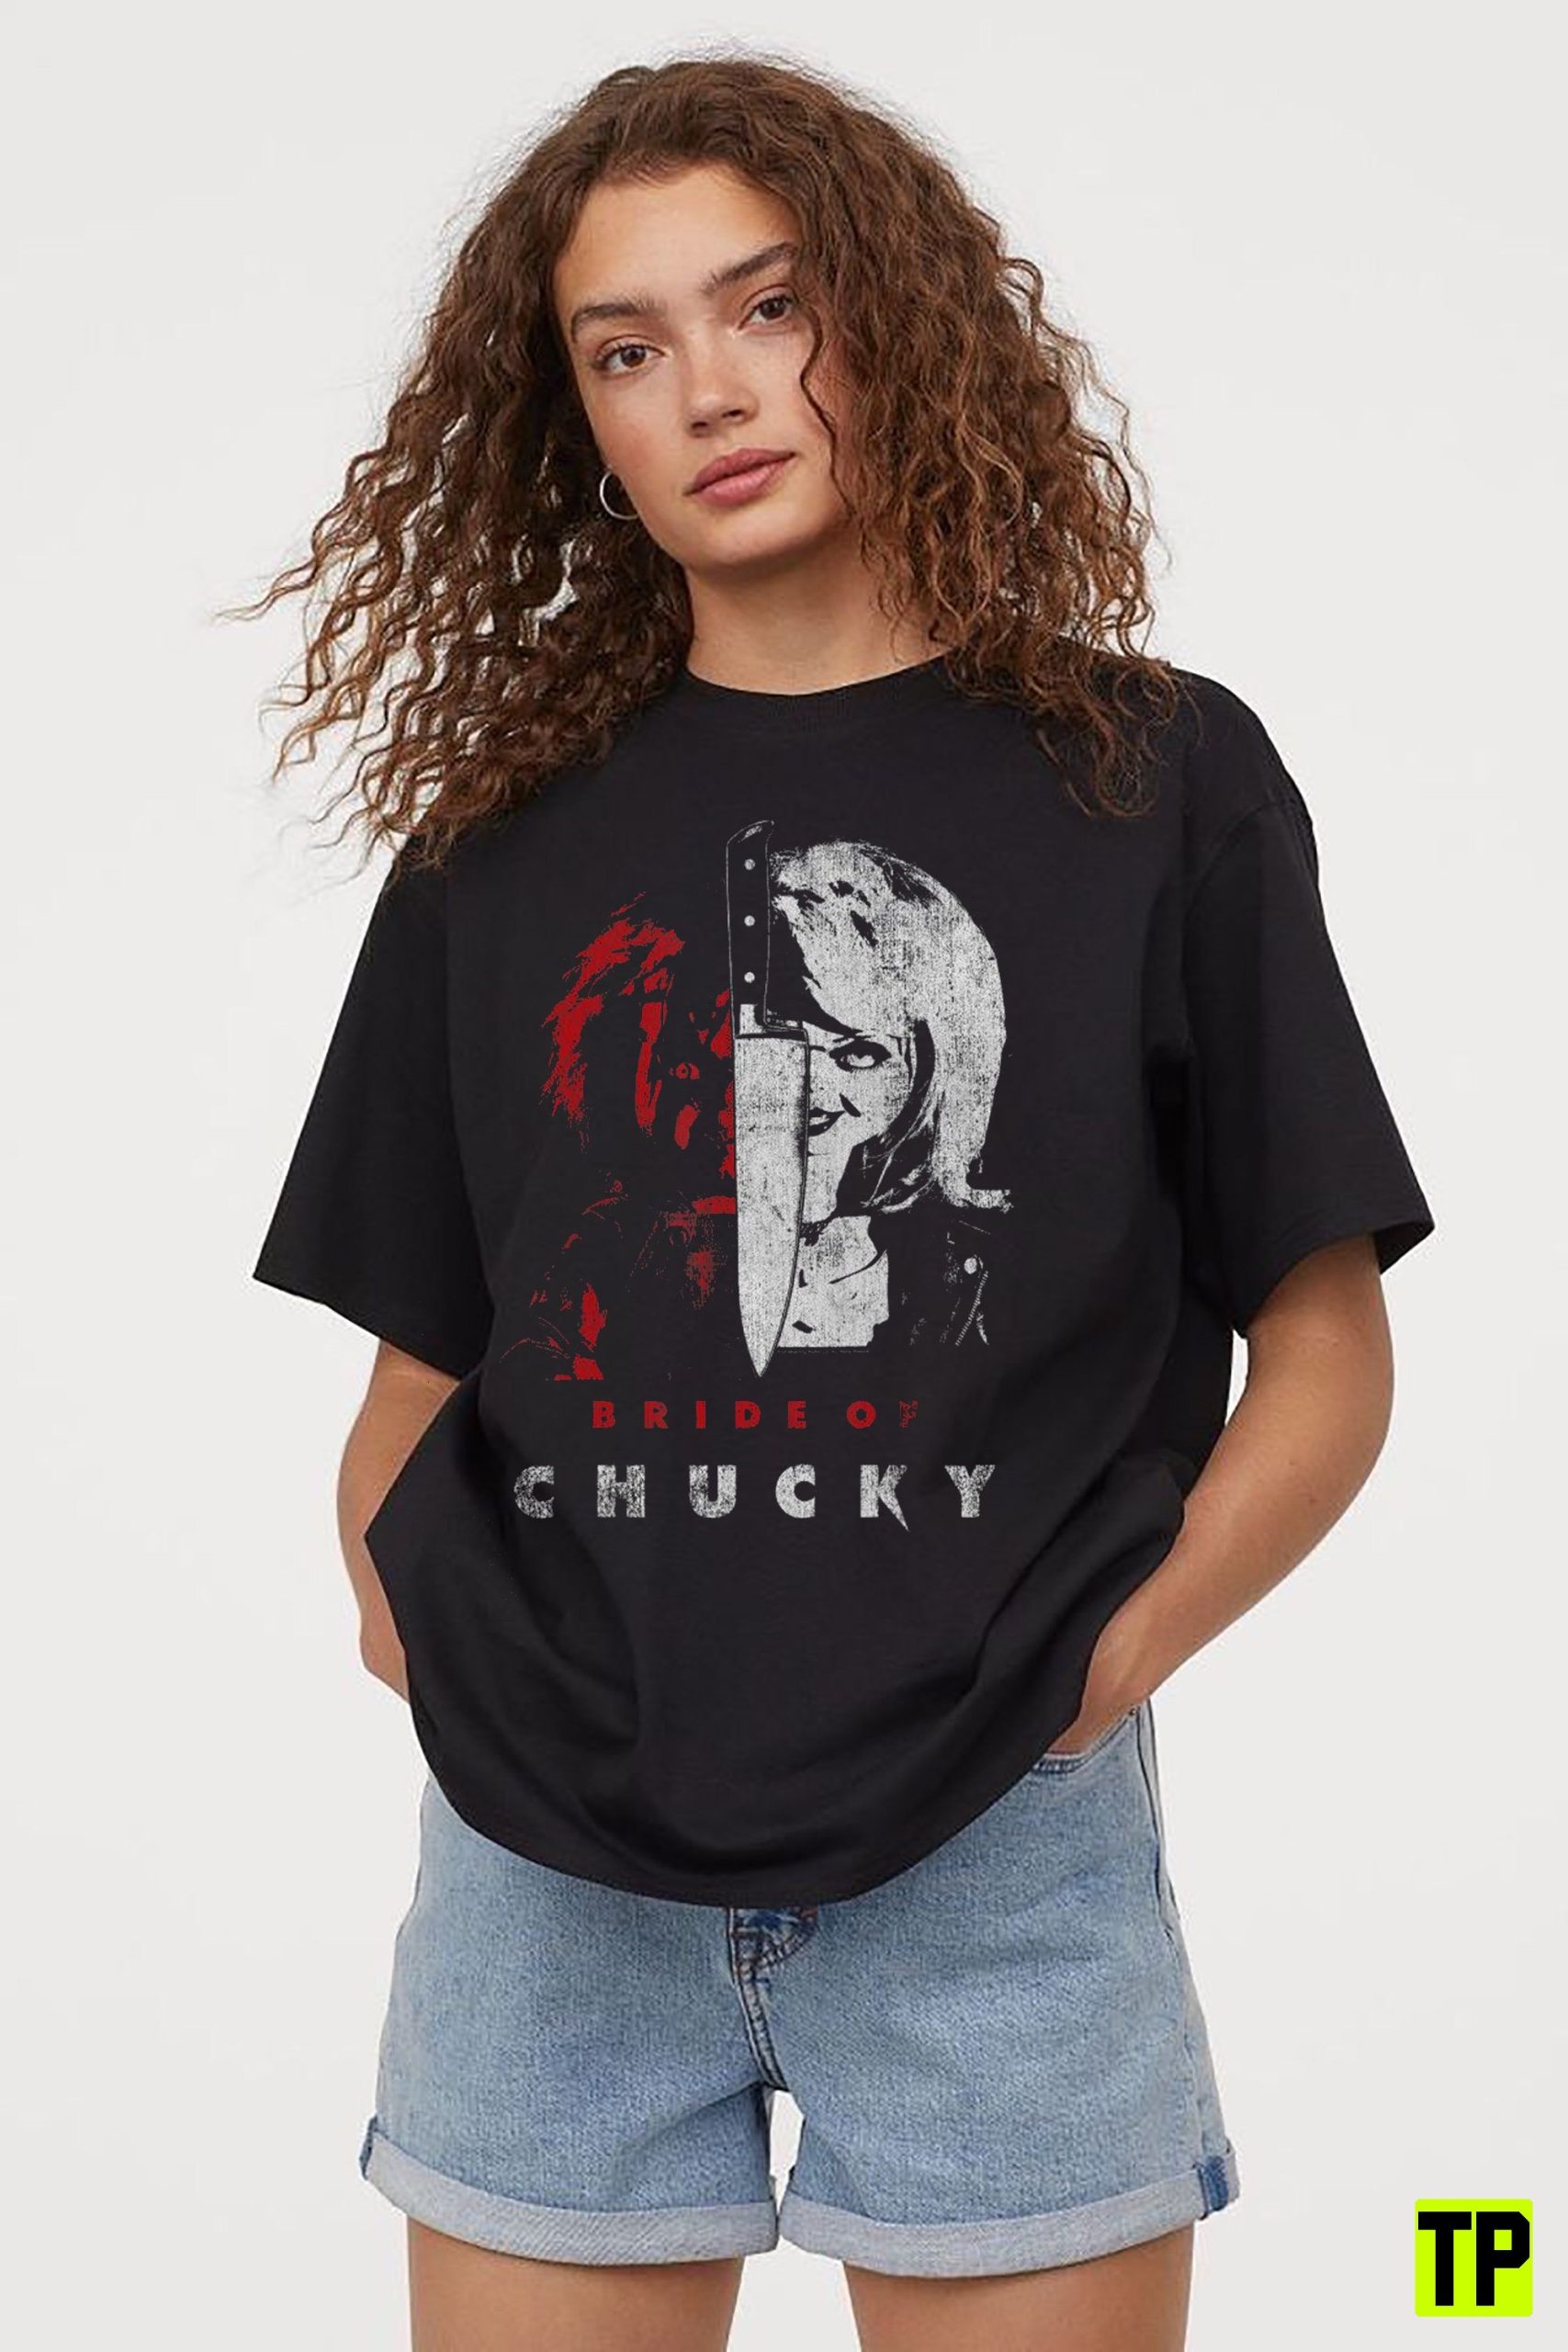 T Jennifer Tilly Charles Lee Ray Bride Of Chucky Unisex Shirt